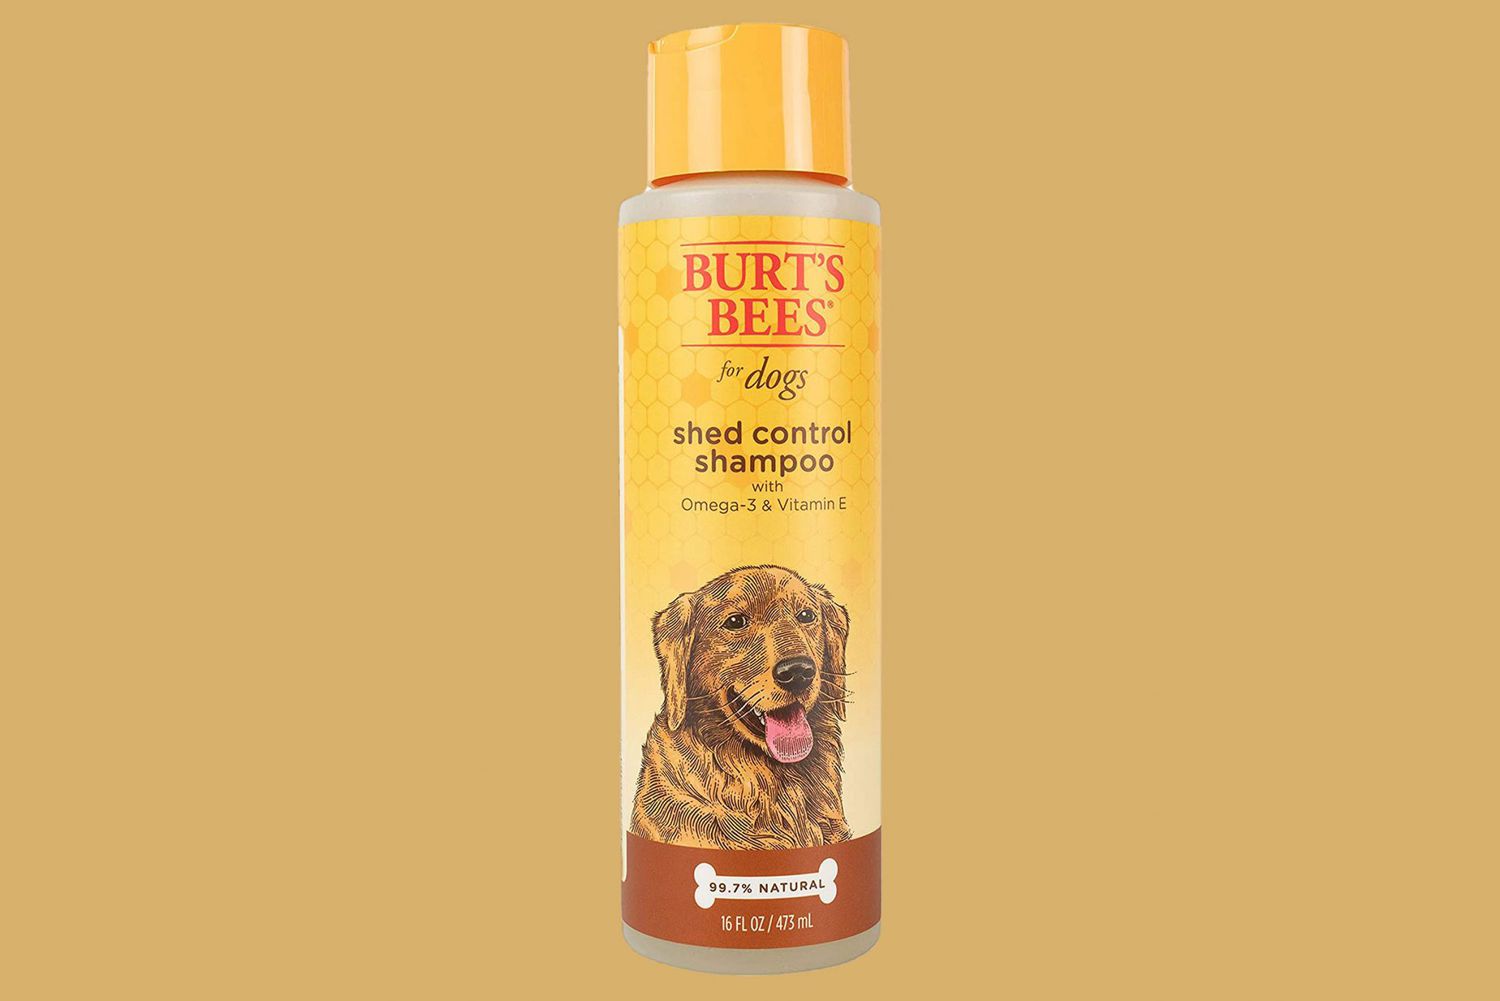 Burt's Bees Shed Control Dog Shampoo